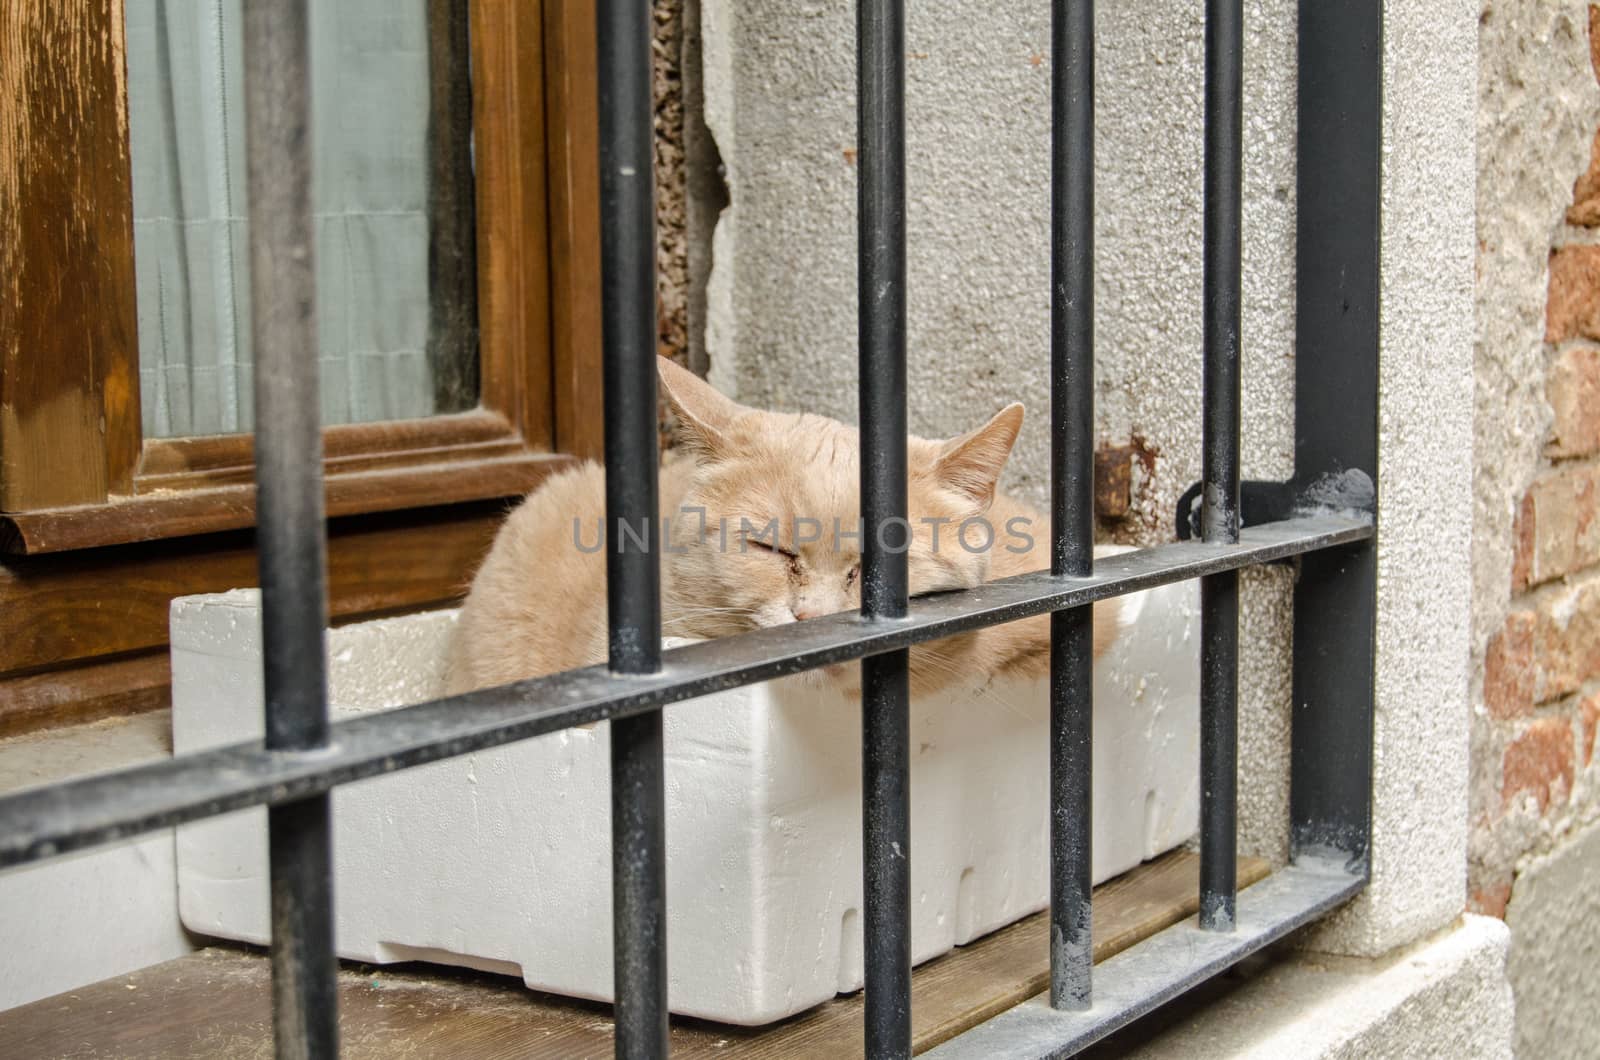 Cat sleeping on barred window ledge by BasPhoto